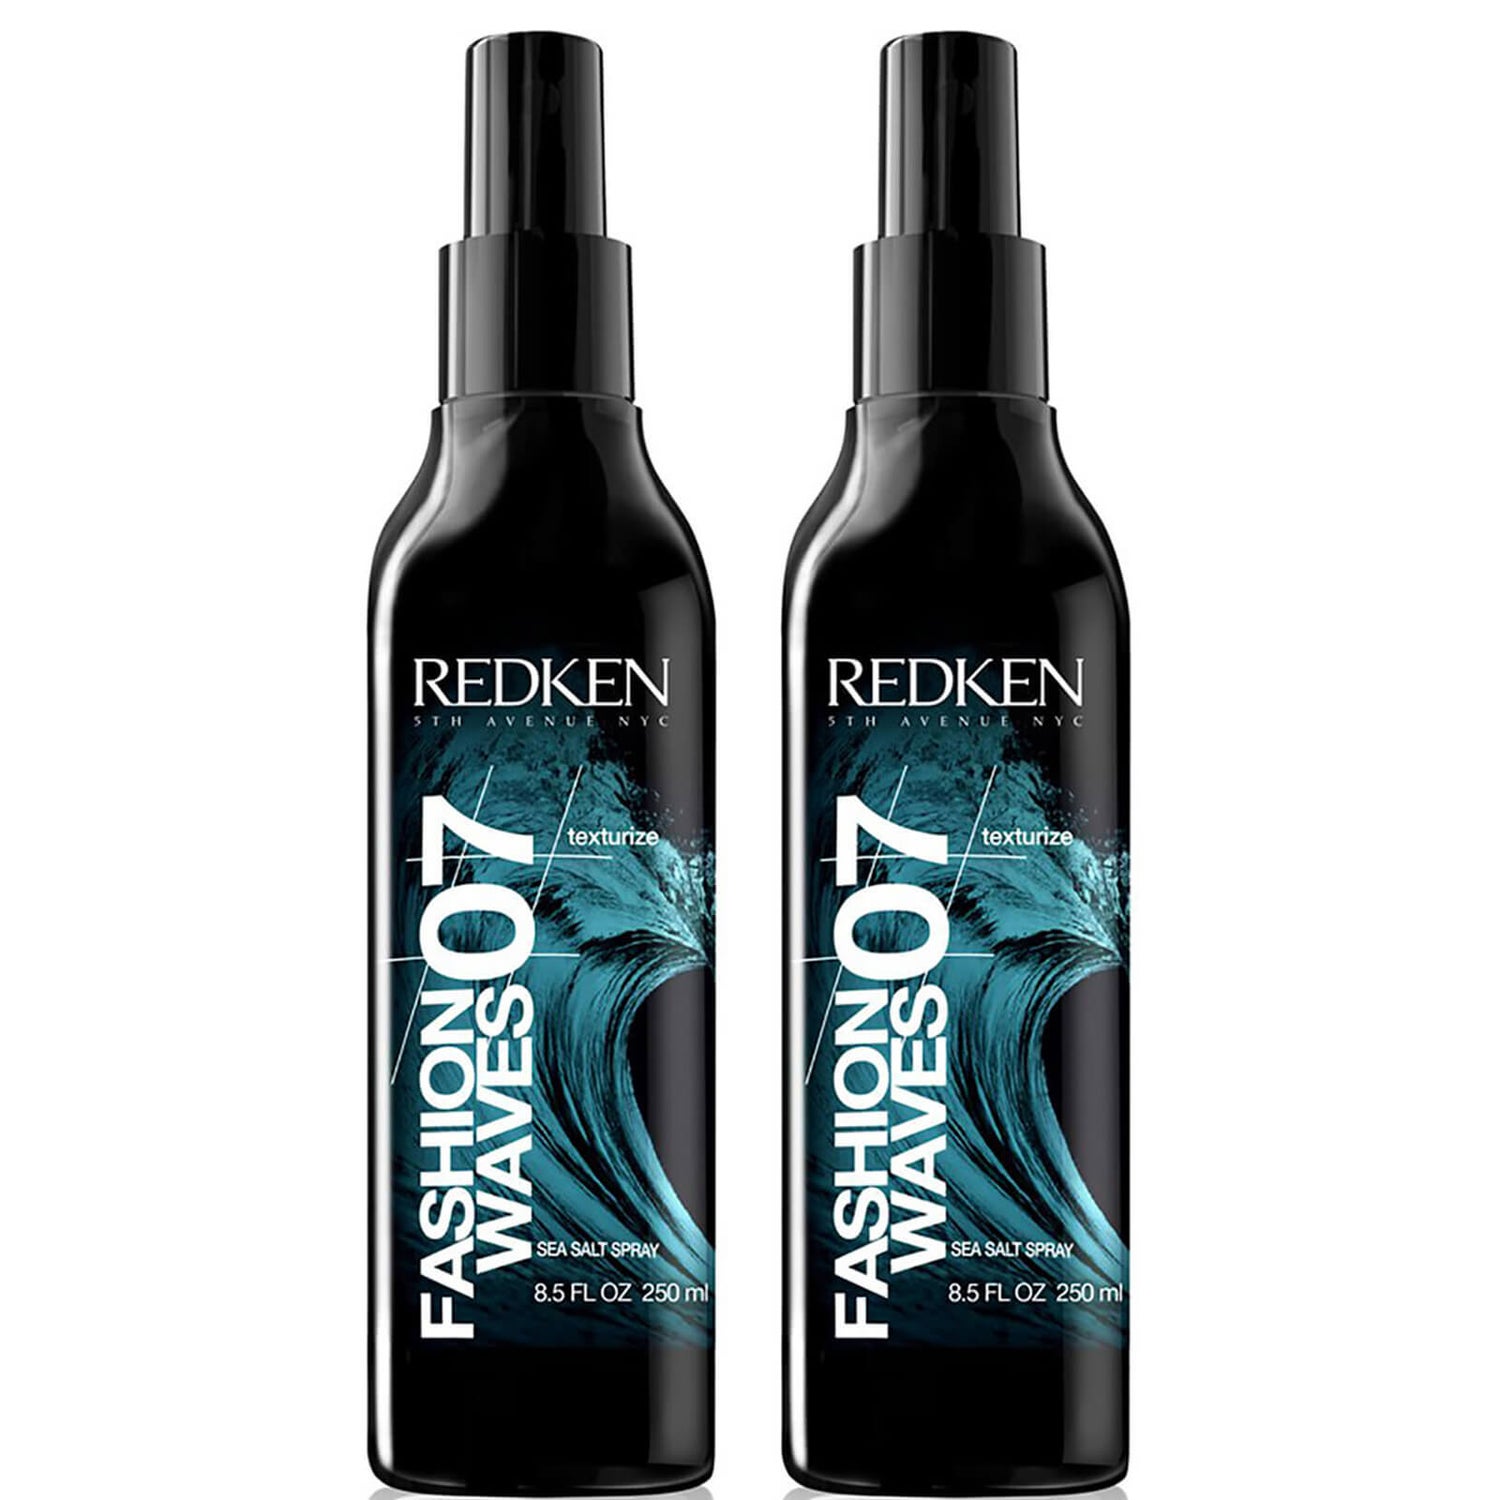 Redken Fashion Waves Sea Salt Spray Duo spray z solą morską - zestaw 2 sztuk (2 x 250 ml)